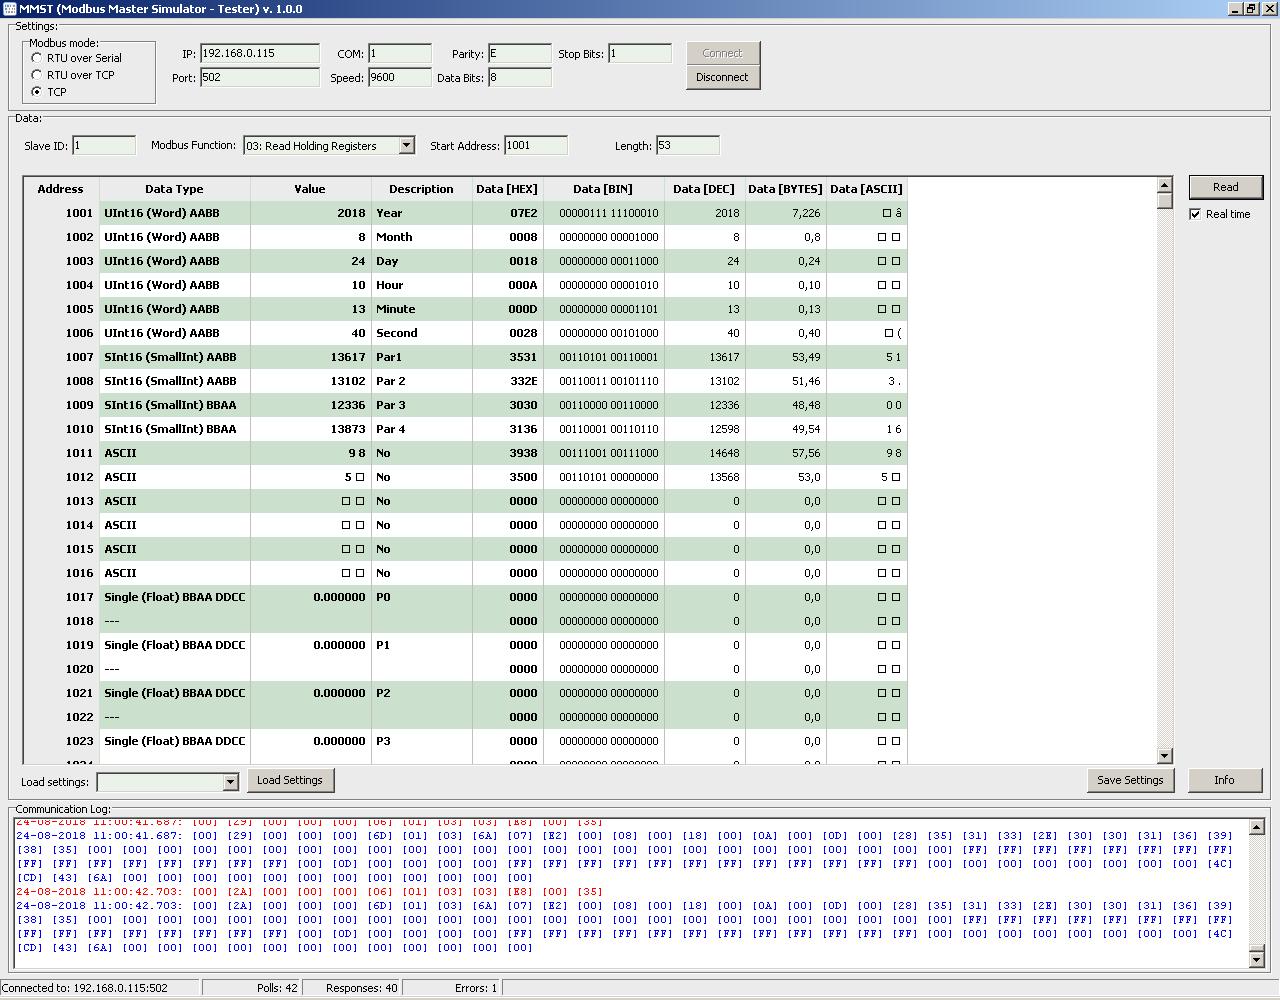 MMST Modbus Master Simulator - Tester screenshot